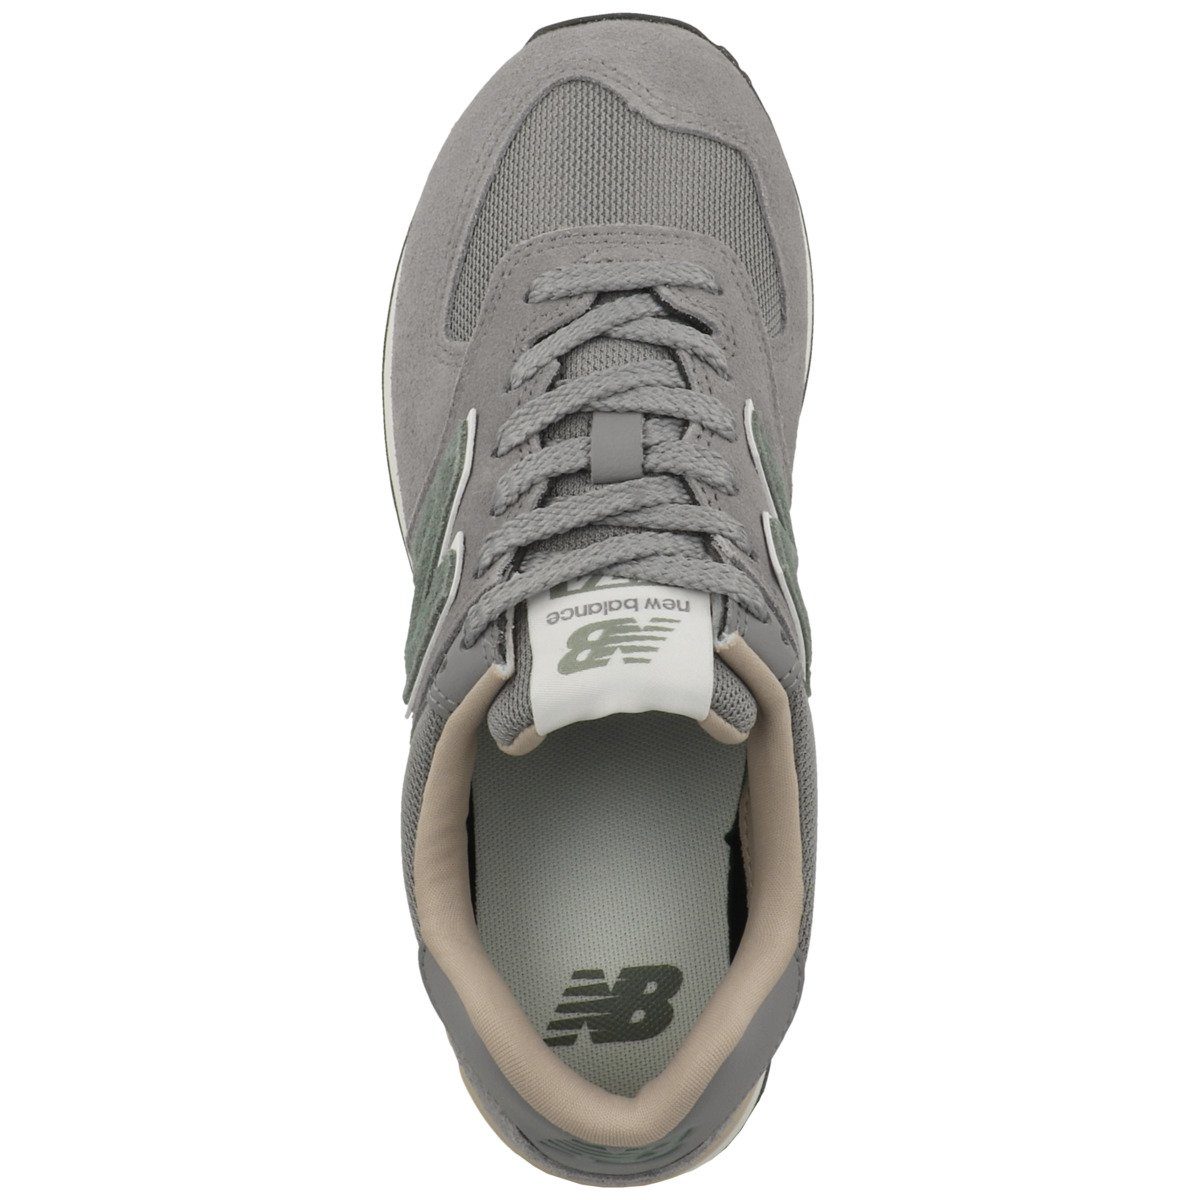 Damen grau WL 574 New Balance Sneaker